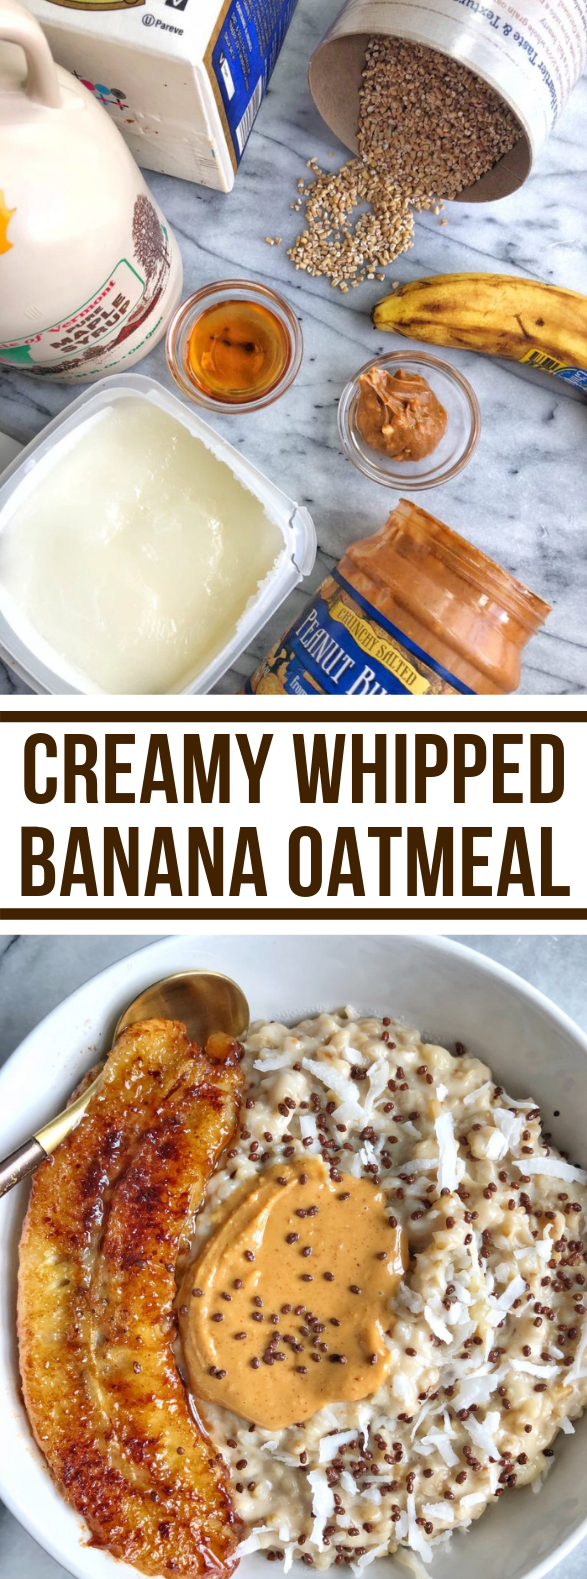 Creamy Whipped Banana Oatmeal #healthy #glutenfree